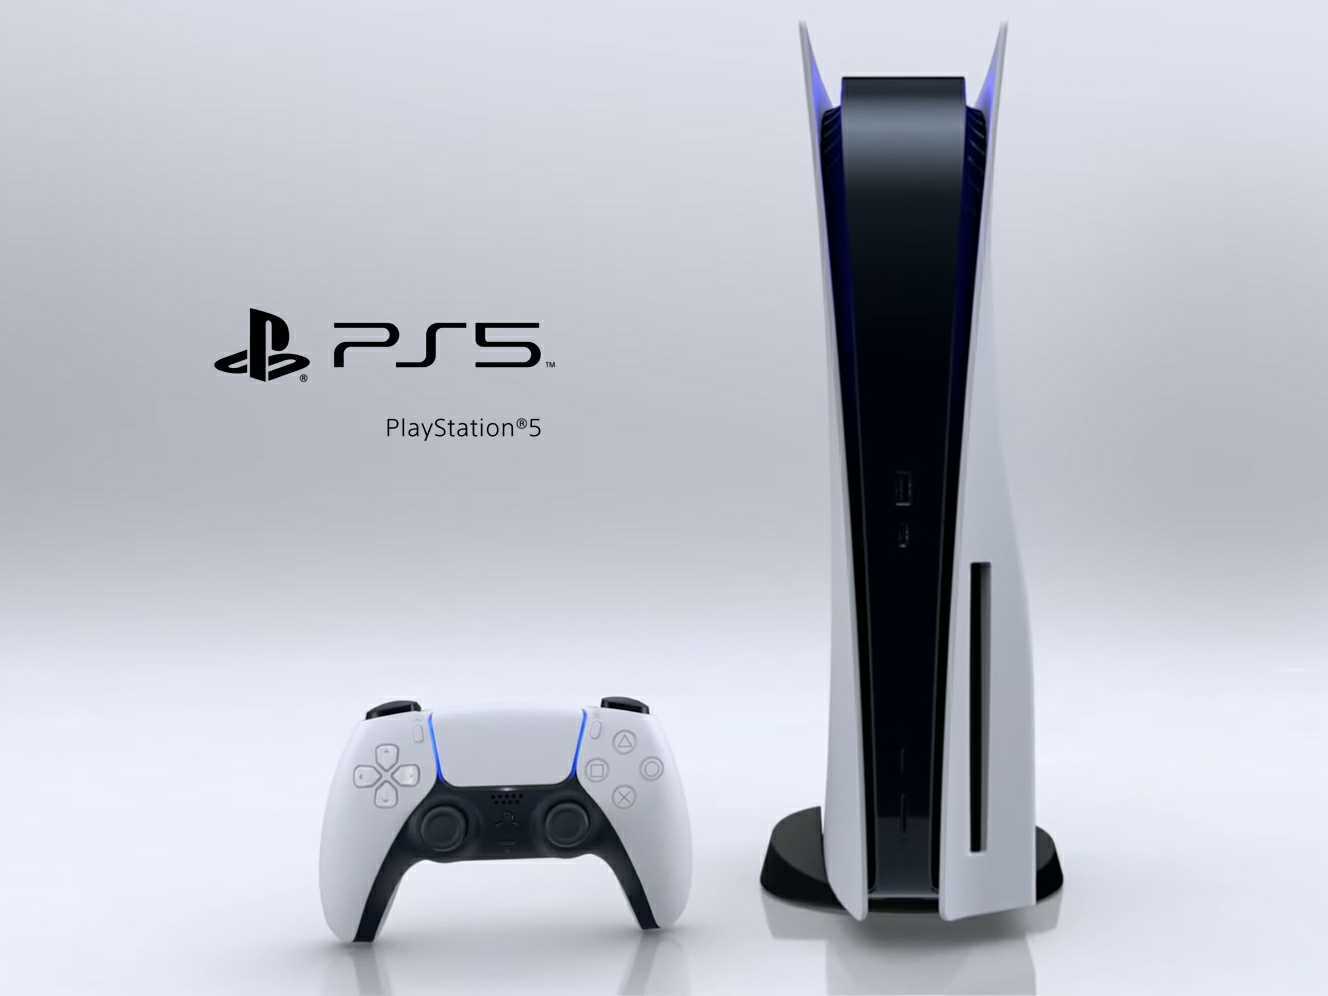 "PlayStation 5